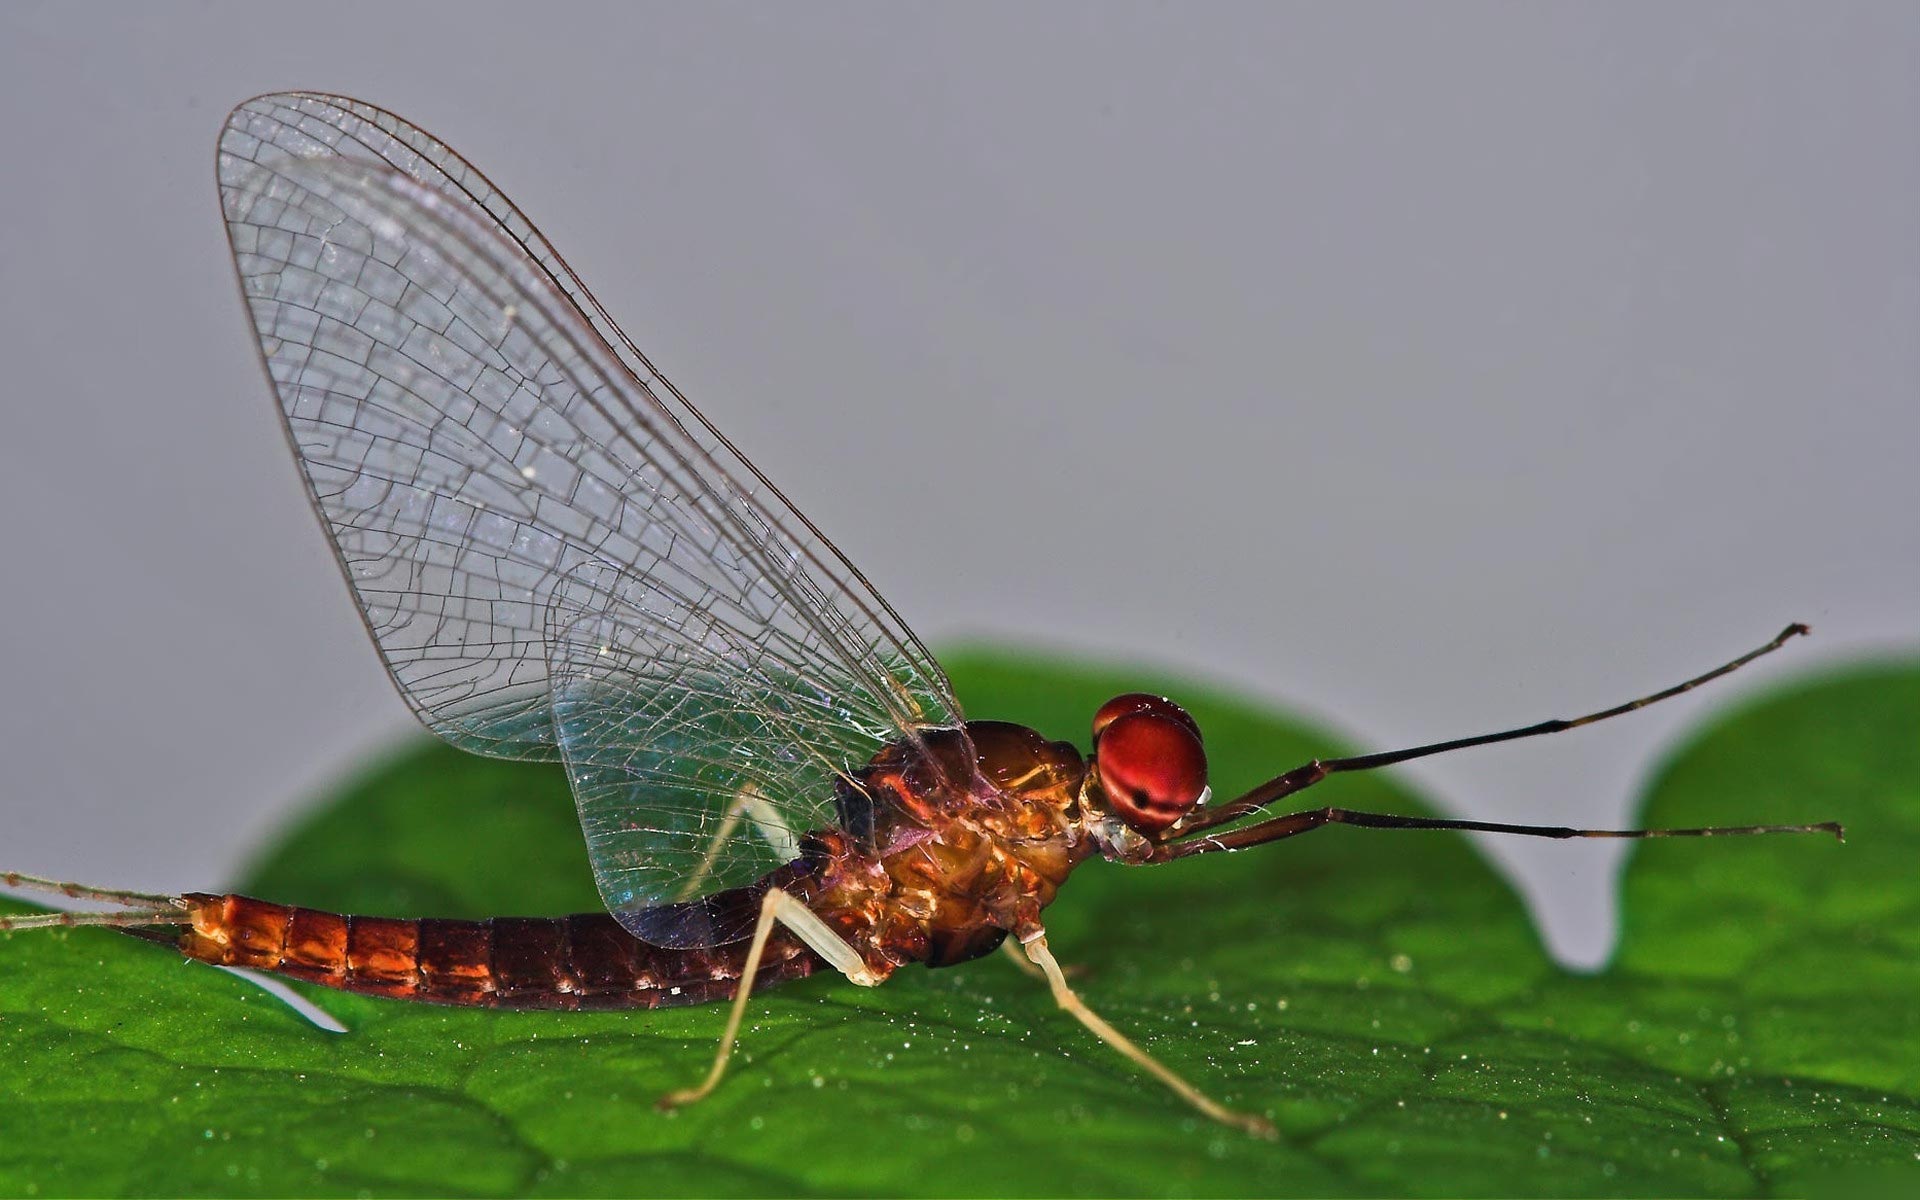 Dragonfly Wallpaper Animal